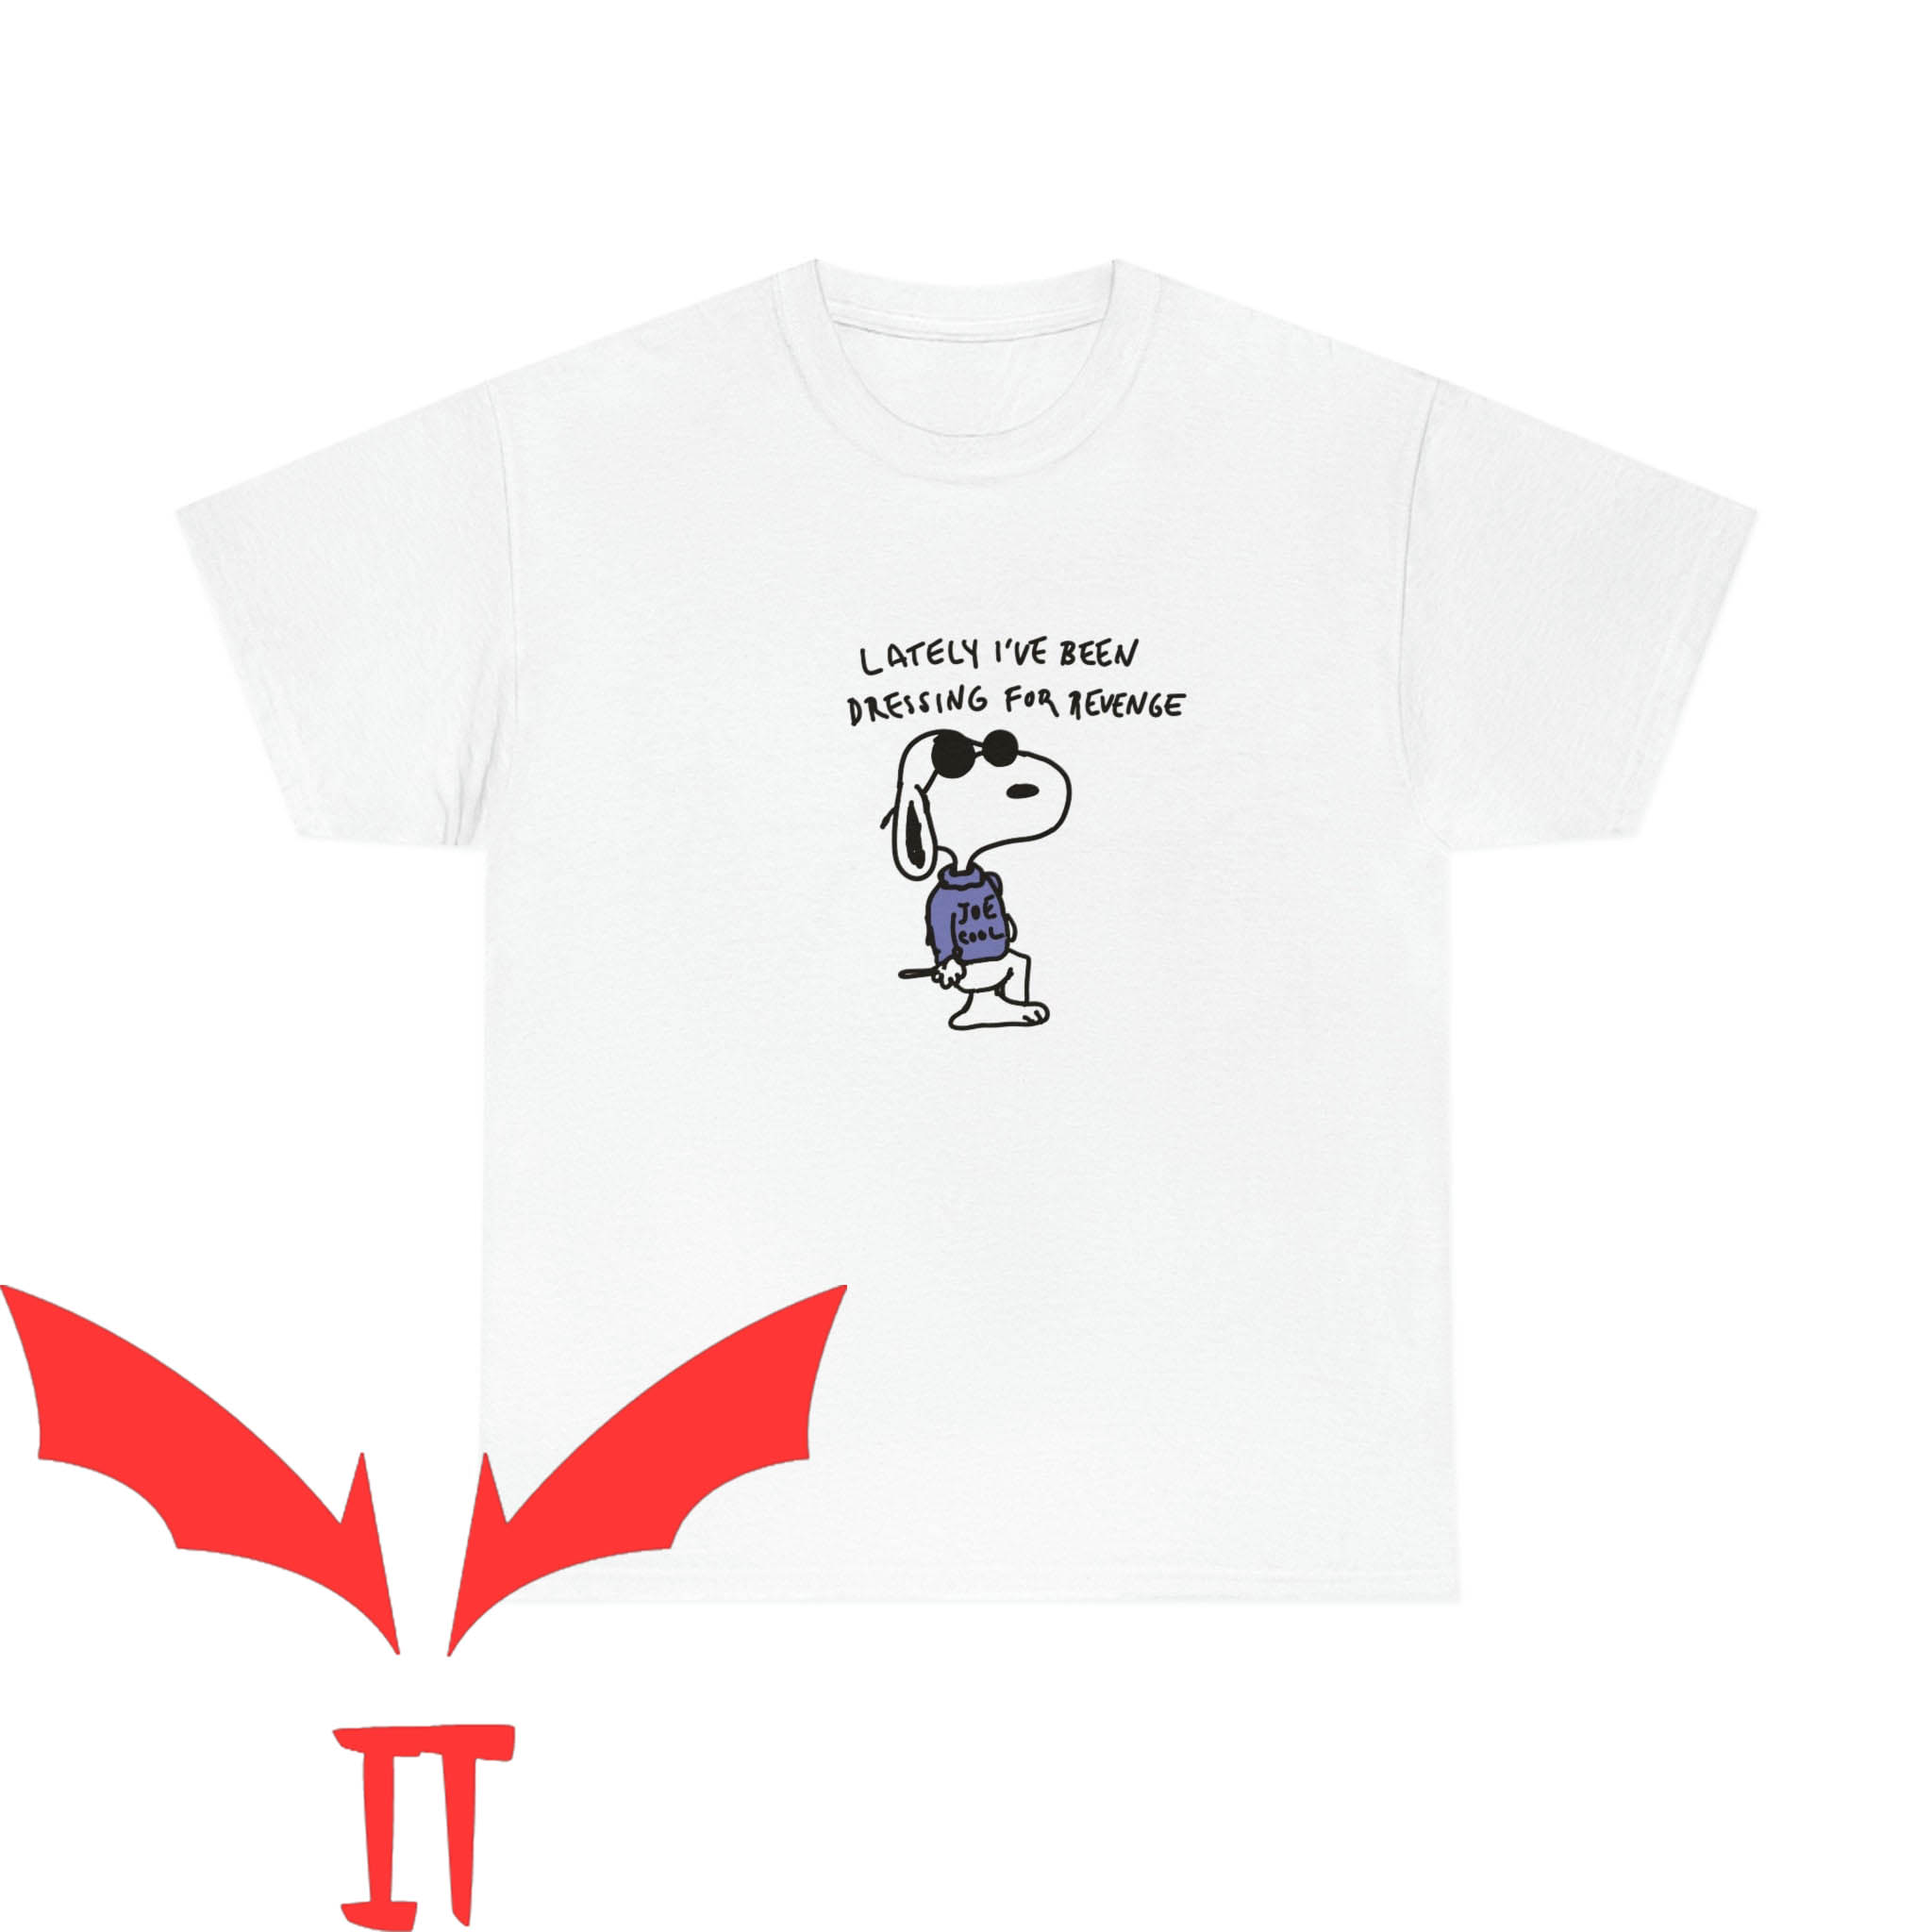 Joe Cool Snoopy T-Shirt Dressing For Revenge Snoopy Tee